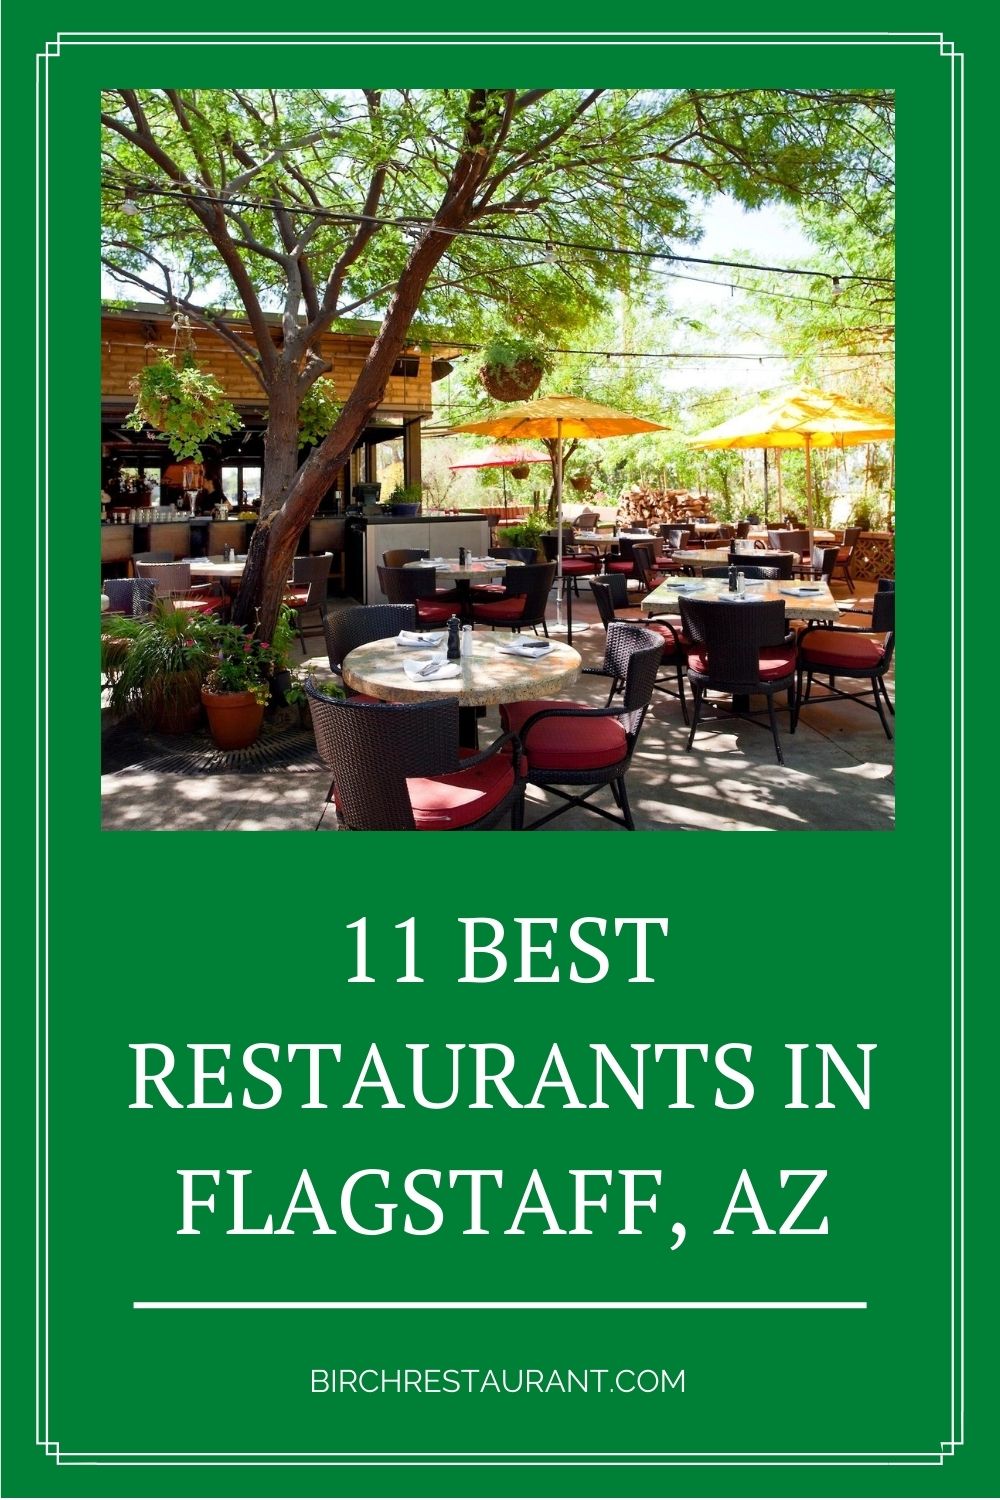 Best Restaurants in Flagstaff